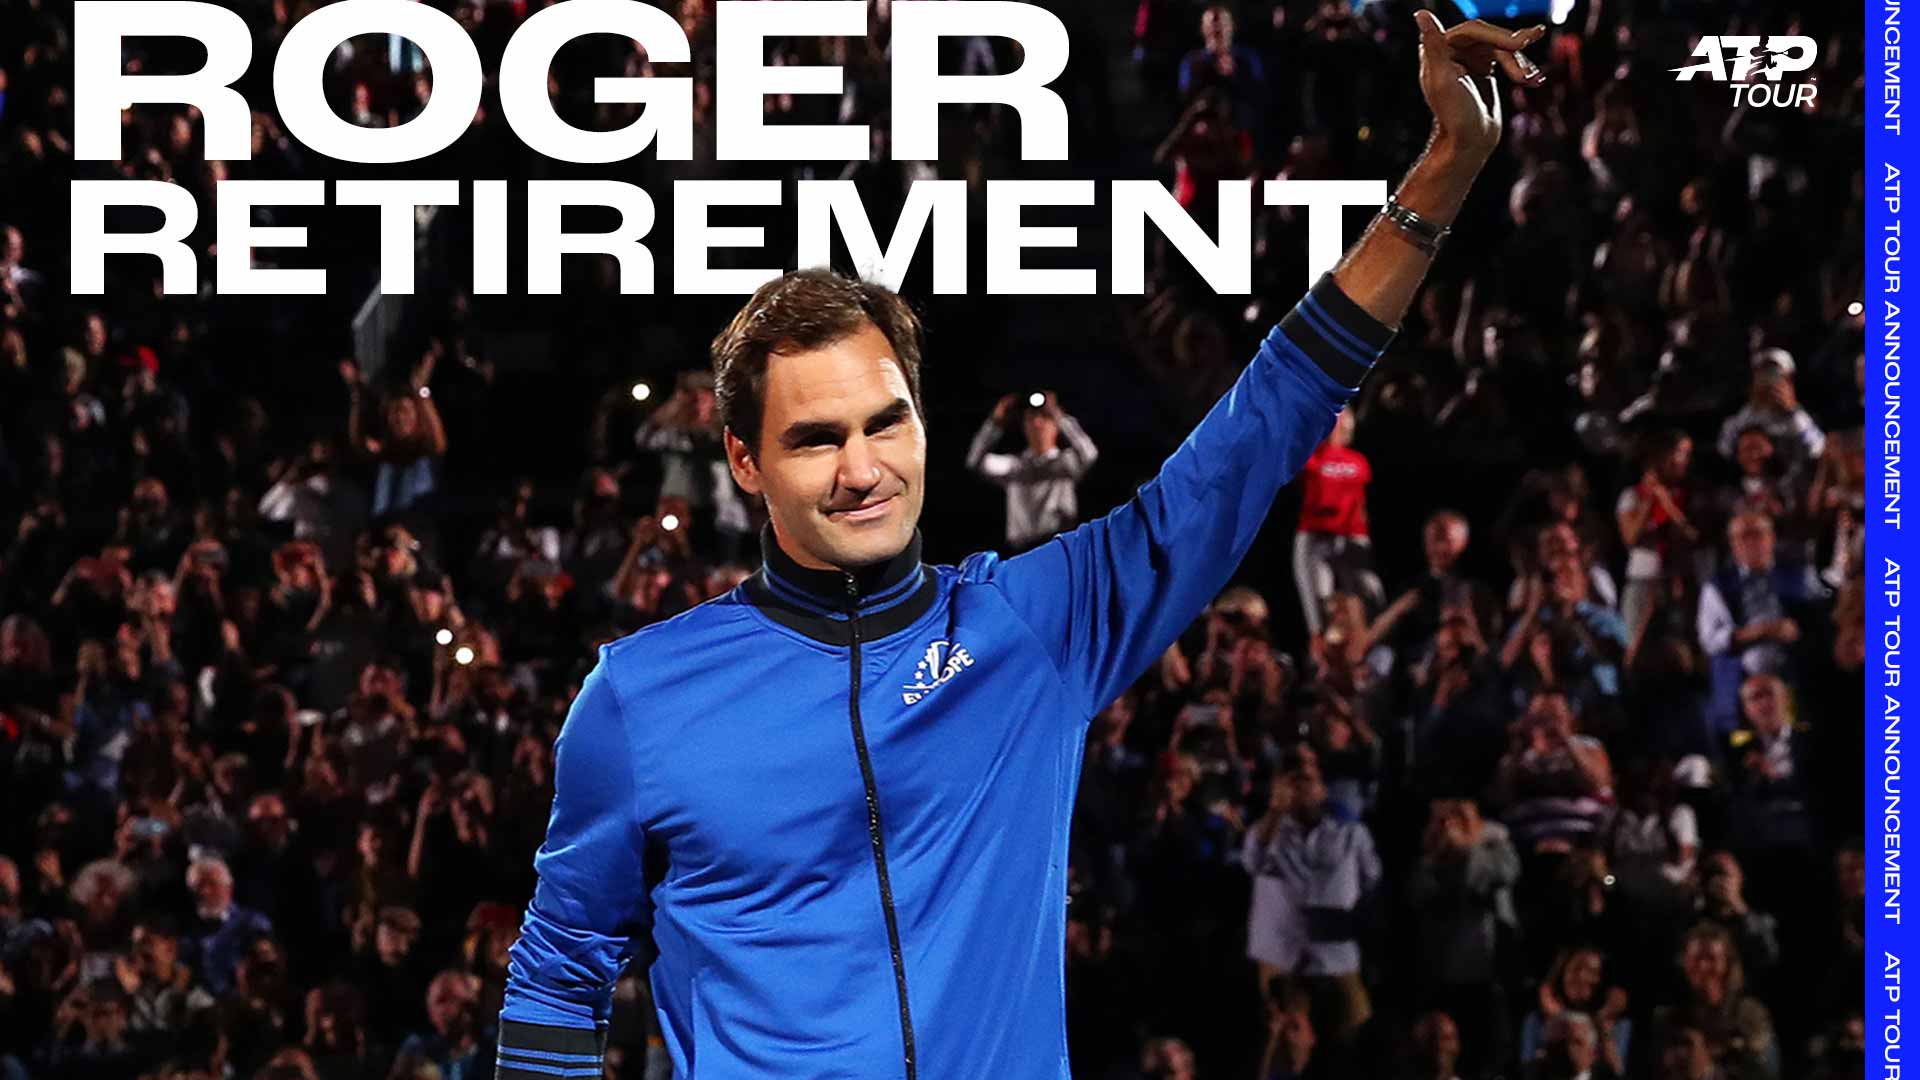 Roger Federer anuncia su retirada del tenis profesional.